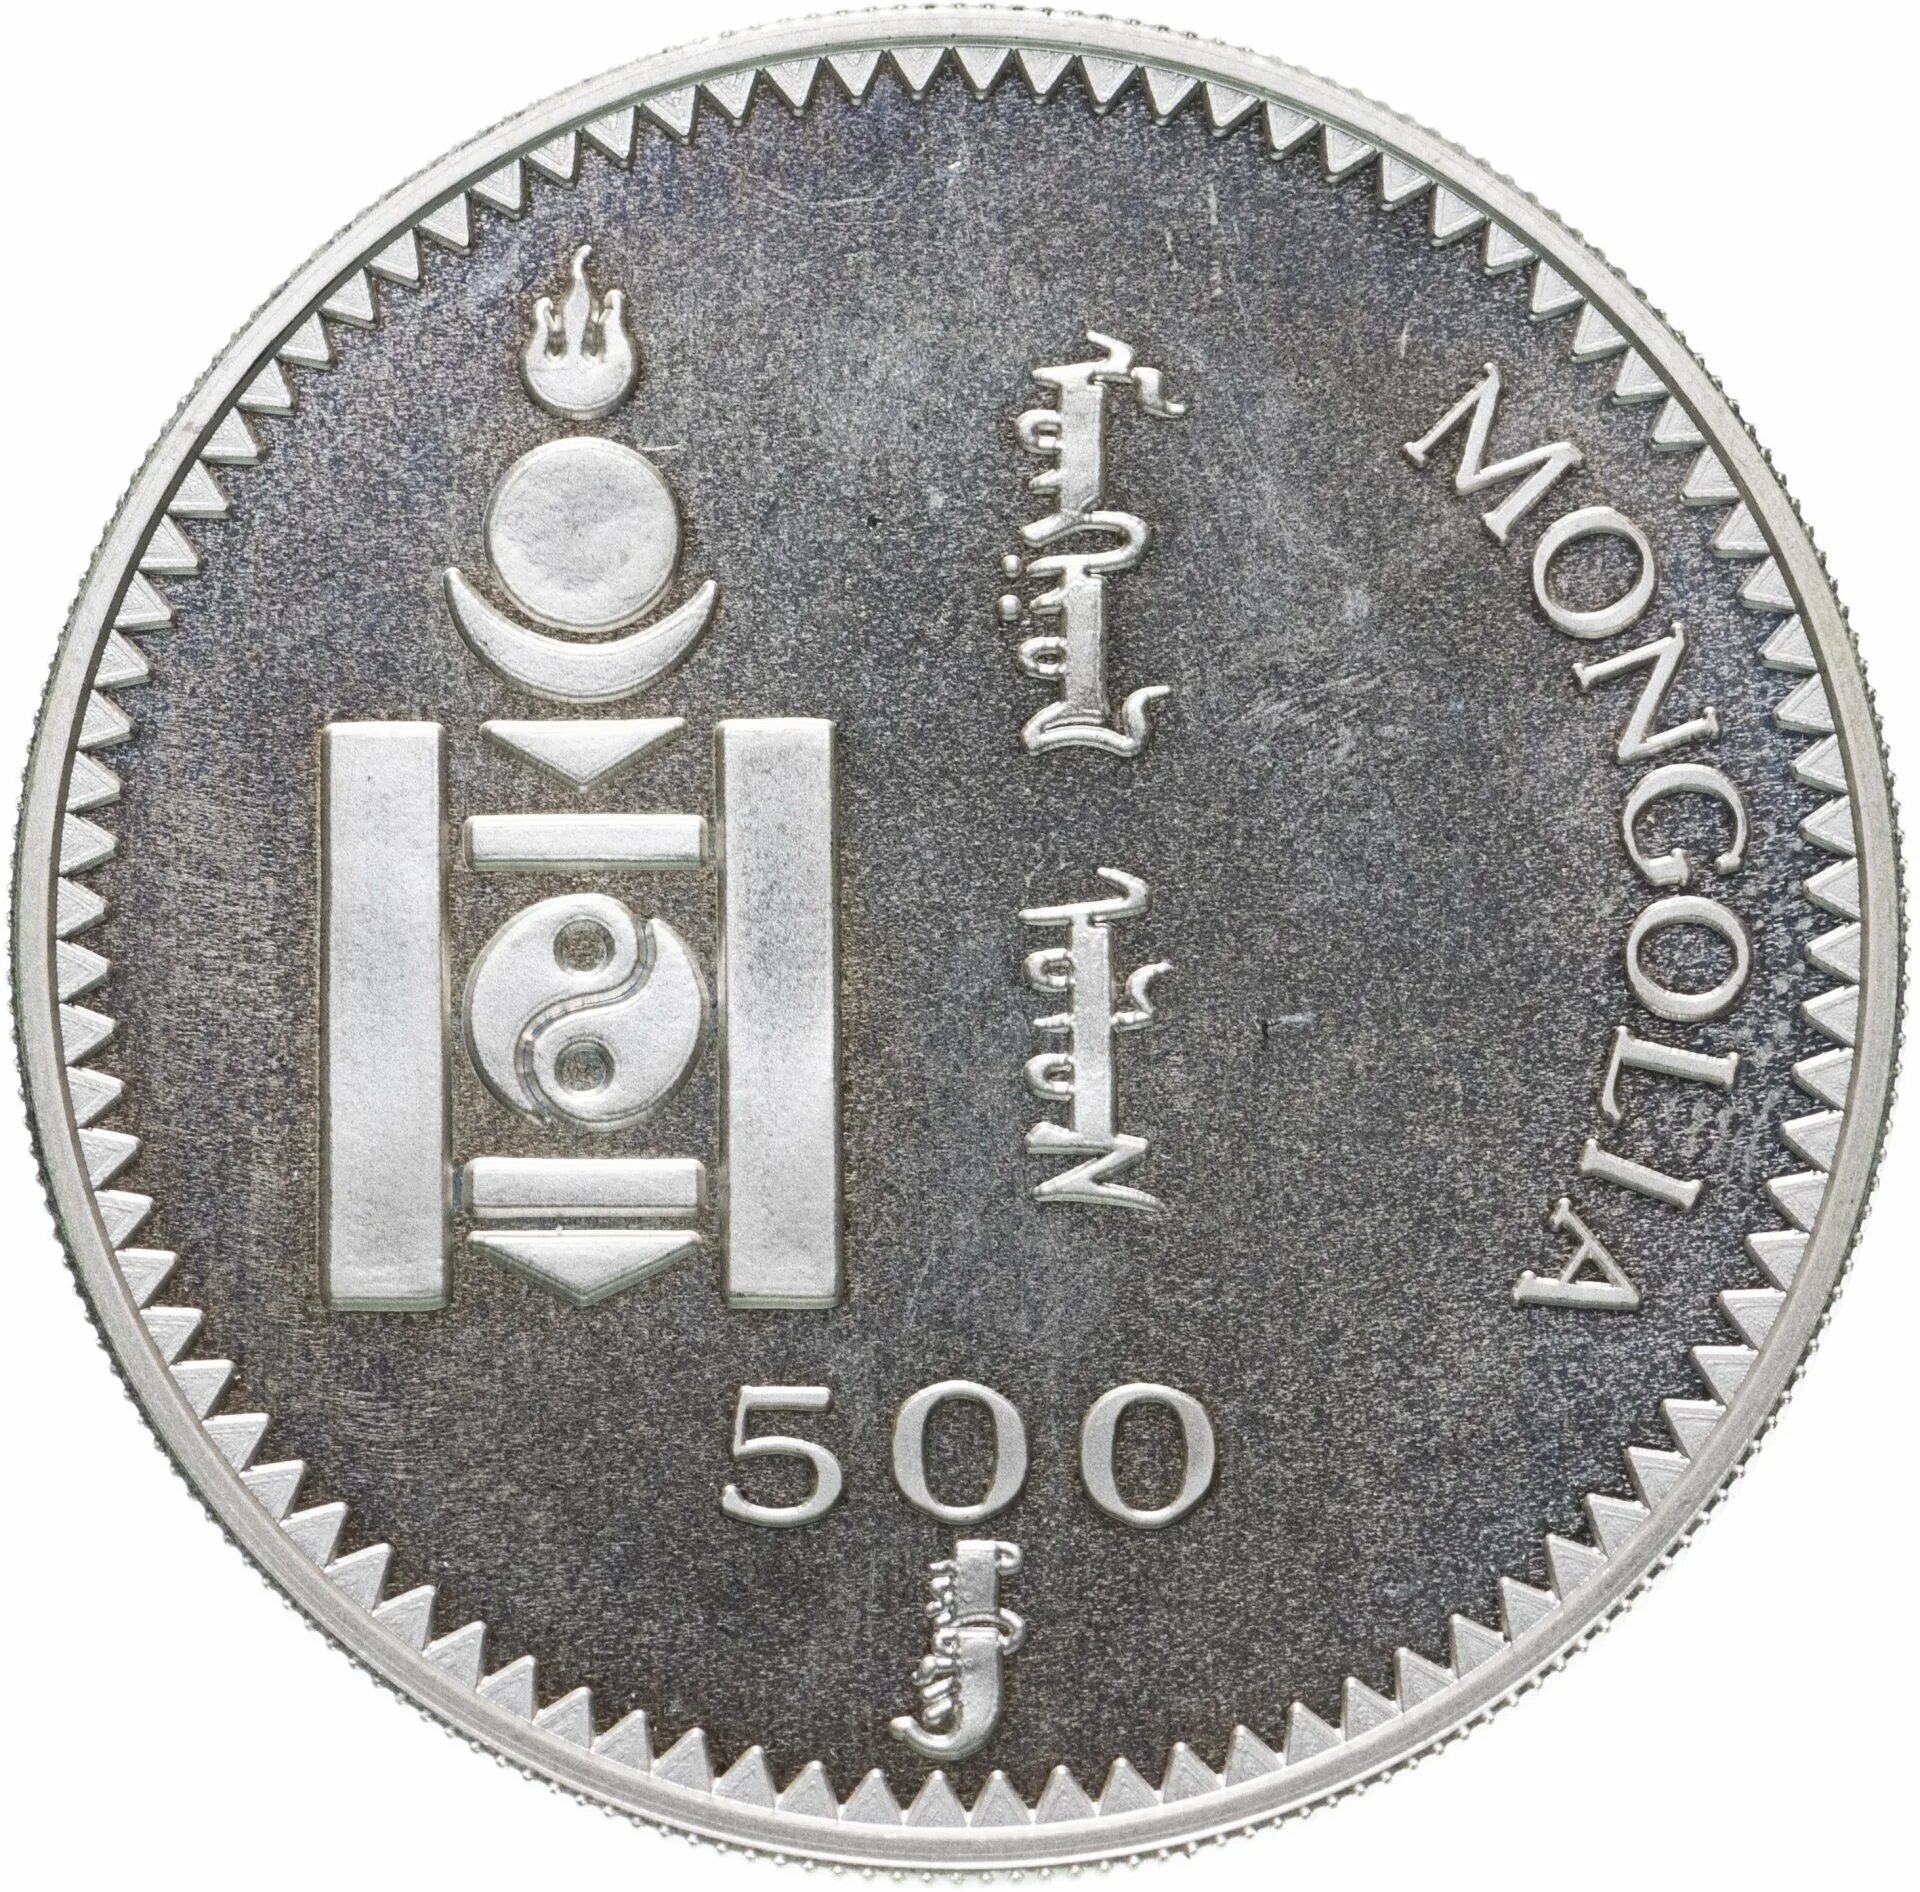 500 Тугриков Монголия. Валюта Монголии монеты. Монгольские монеты 500 тугриков. Монгольский тугрик монета.